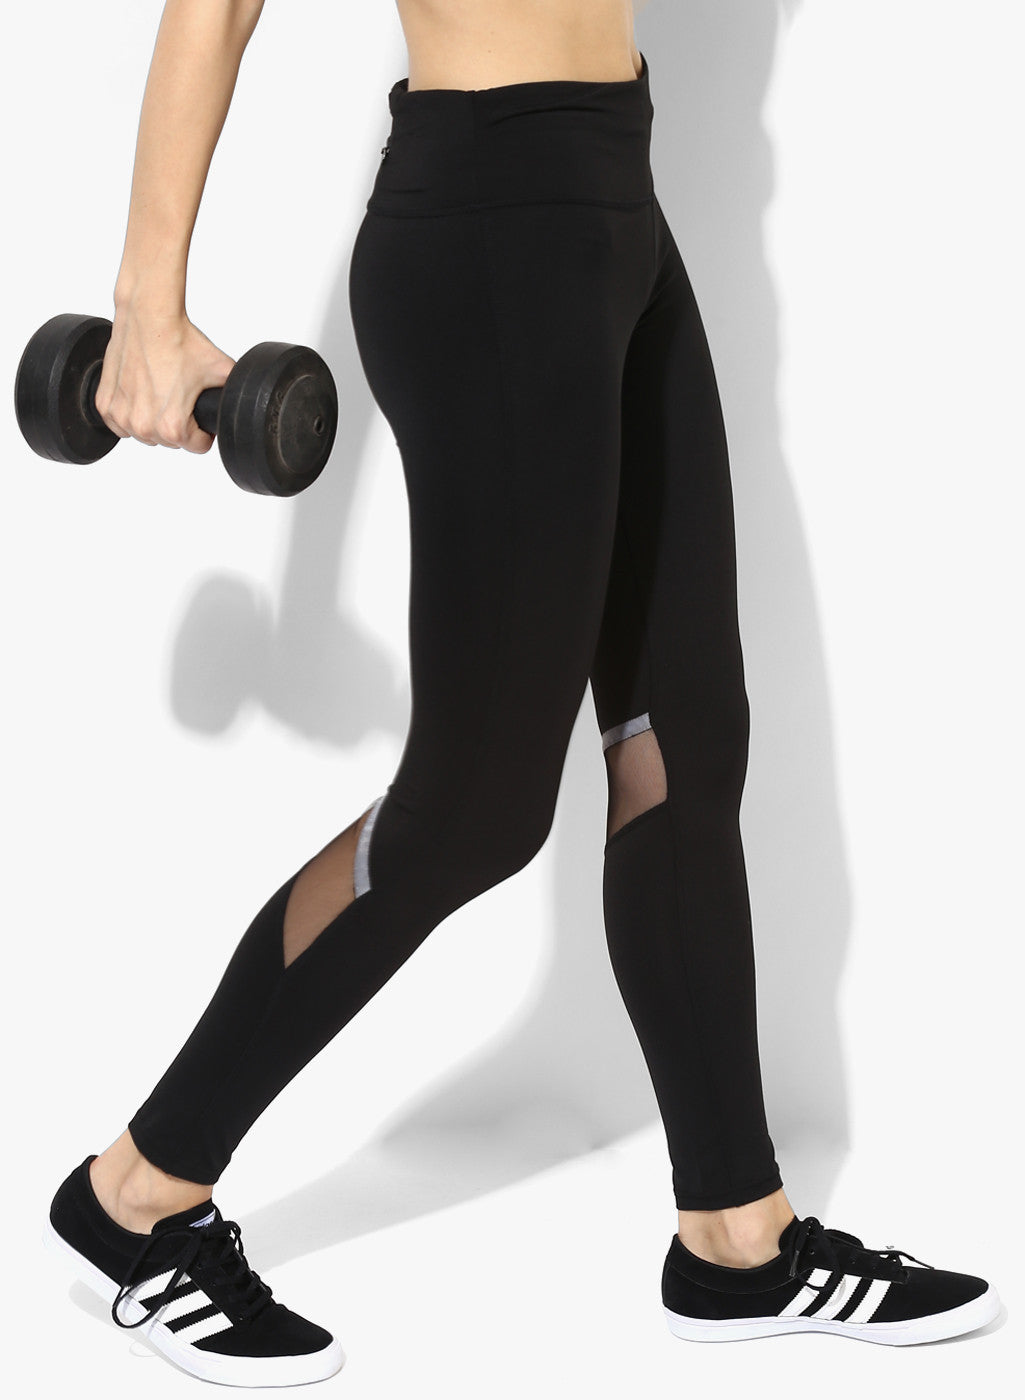 Spiritual Warrior gym Workout active wear Yoga pants Athleisure black leggings